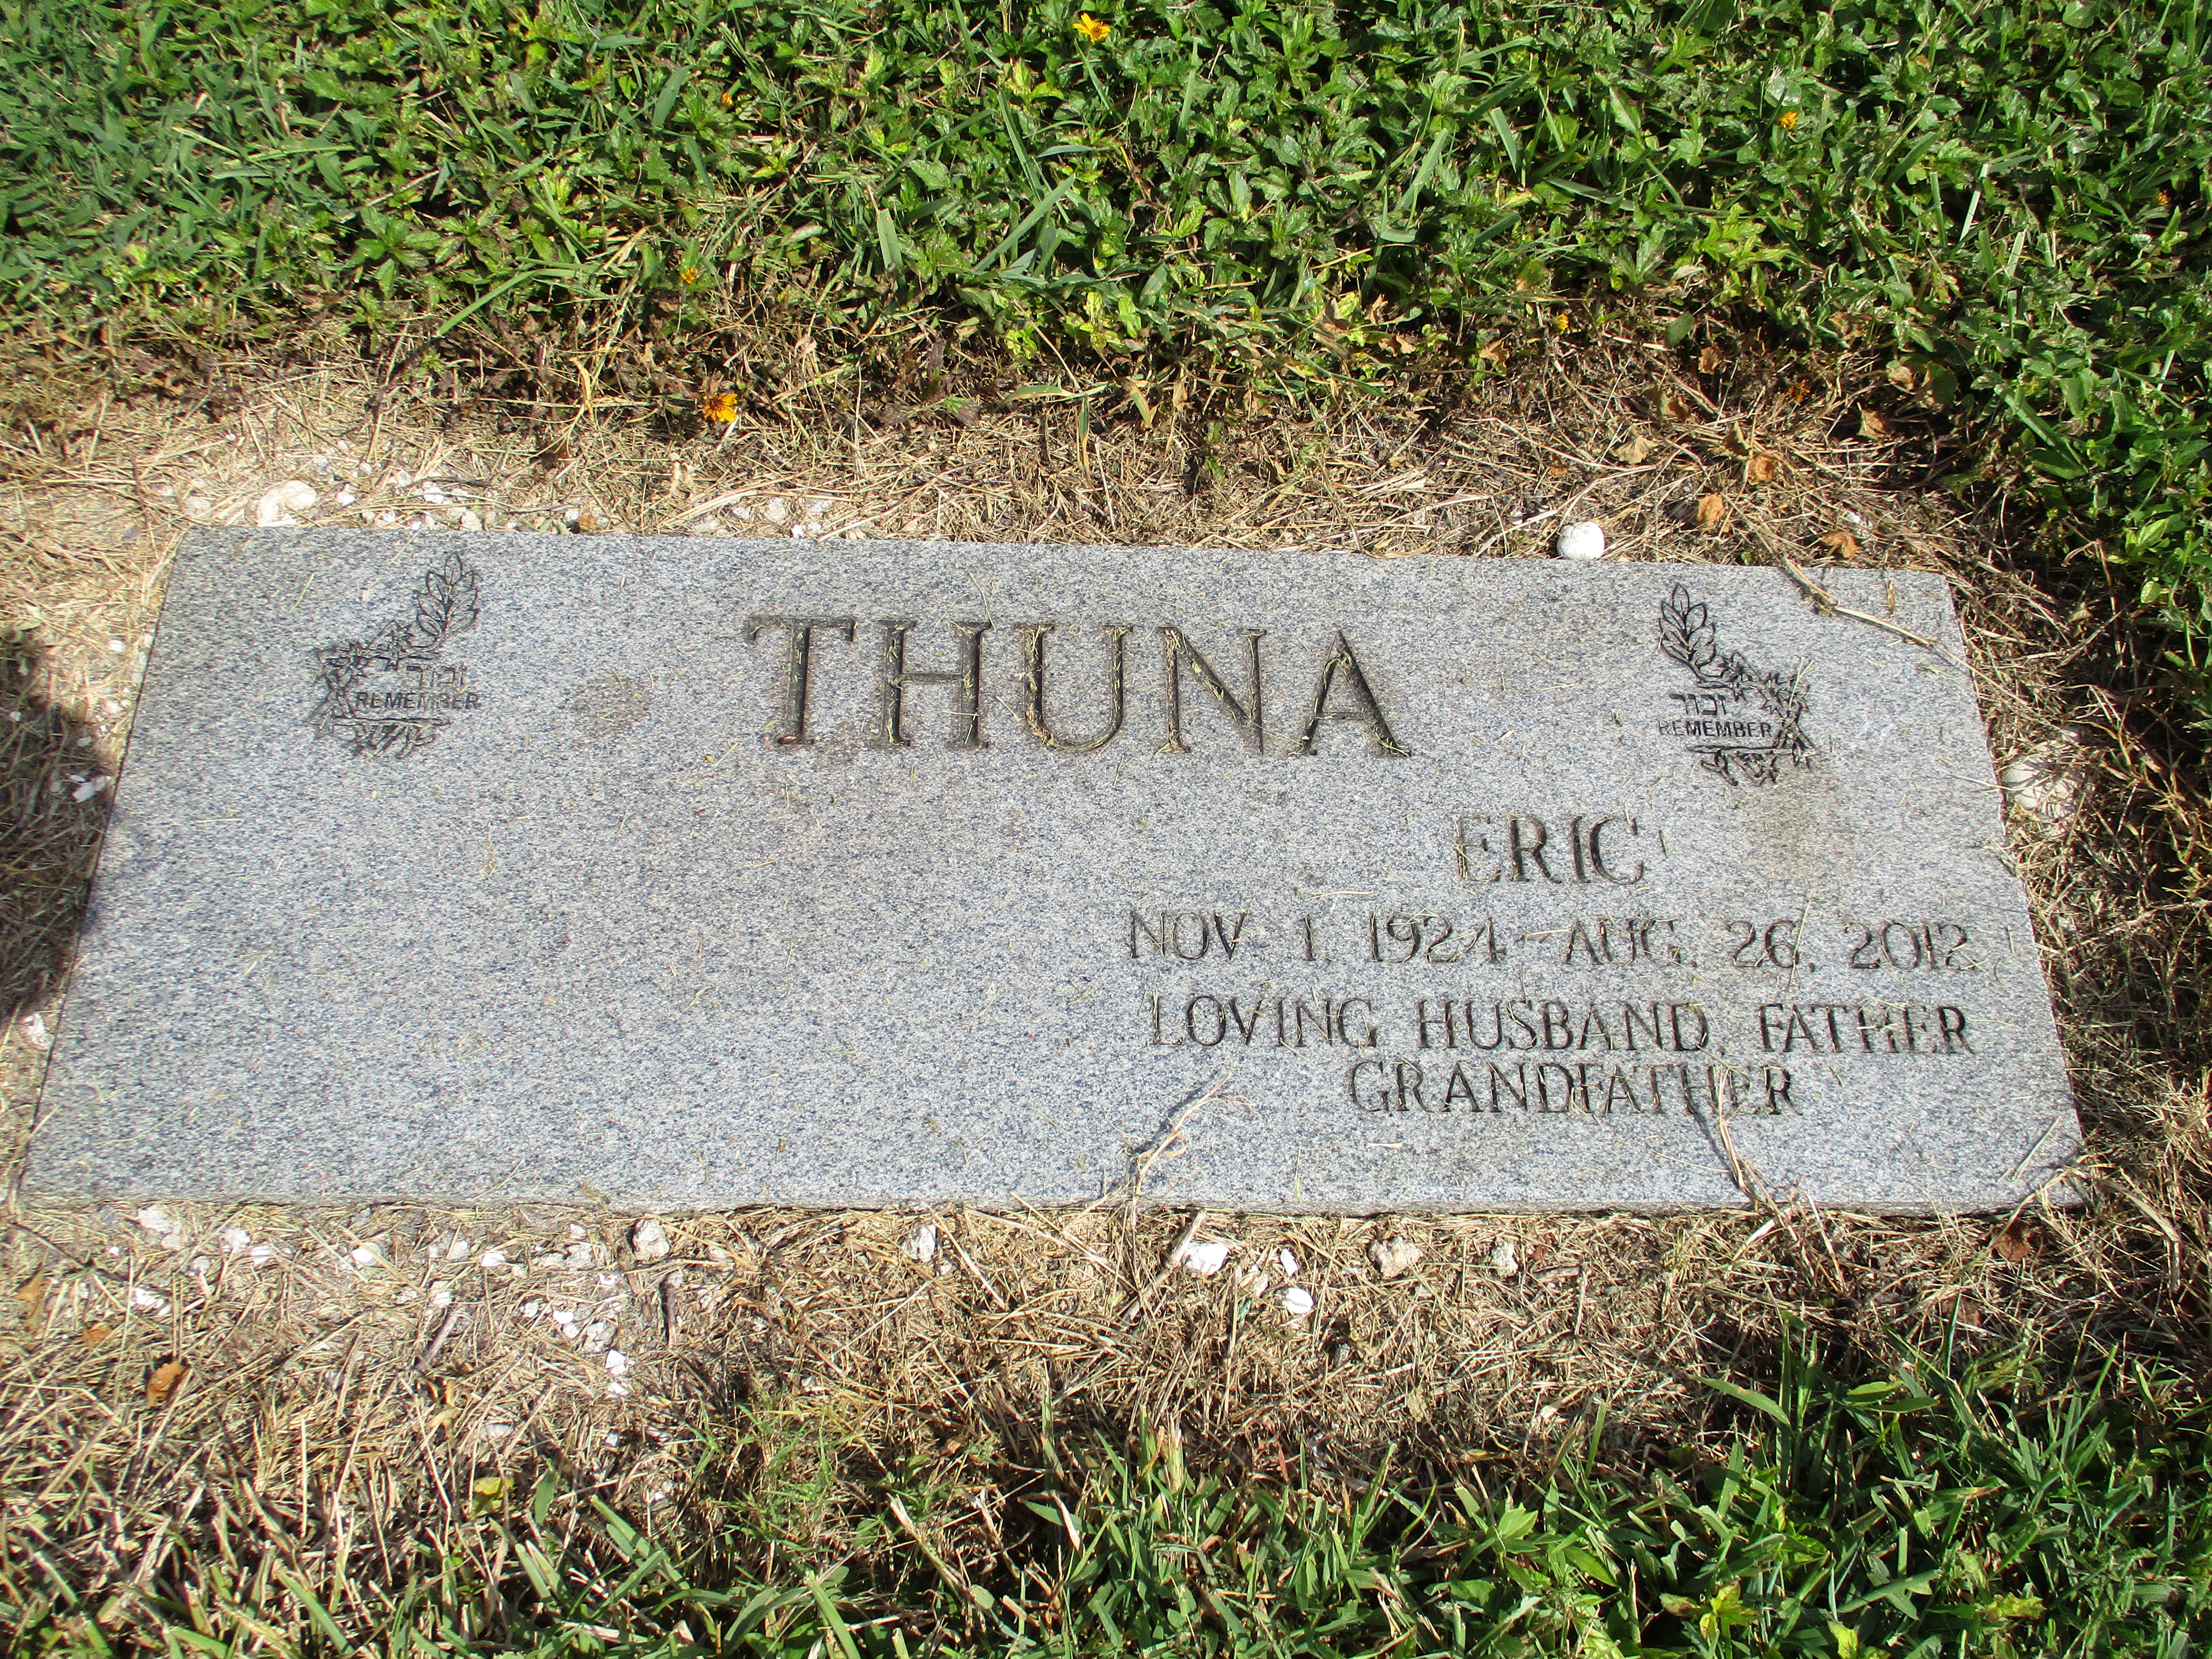 Eric Thuna